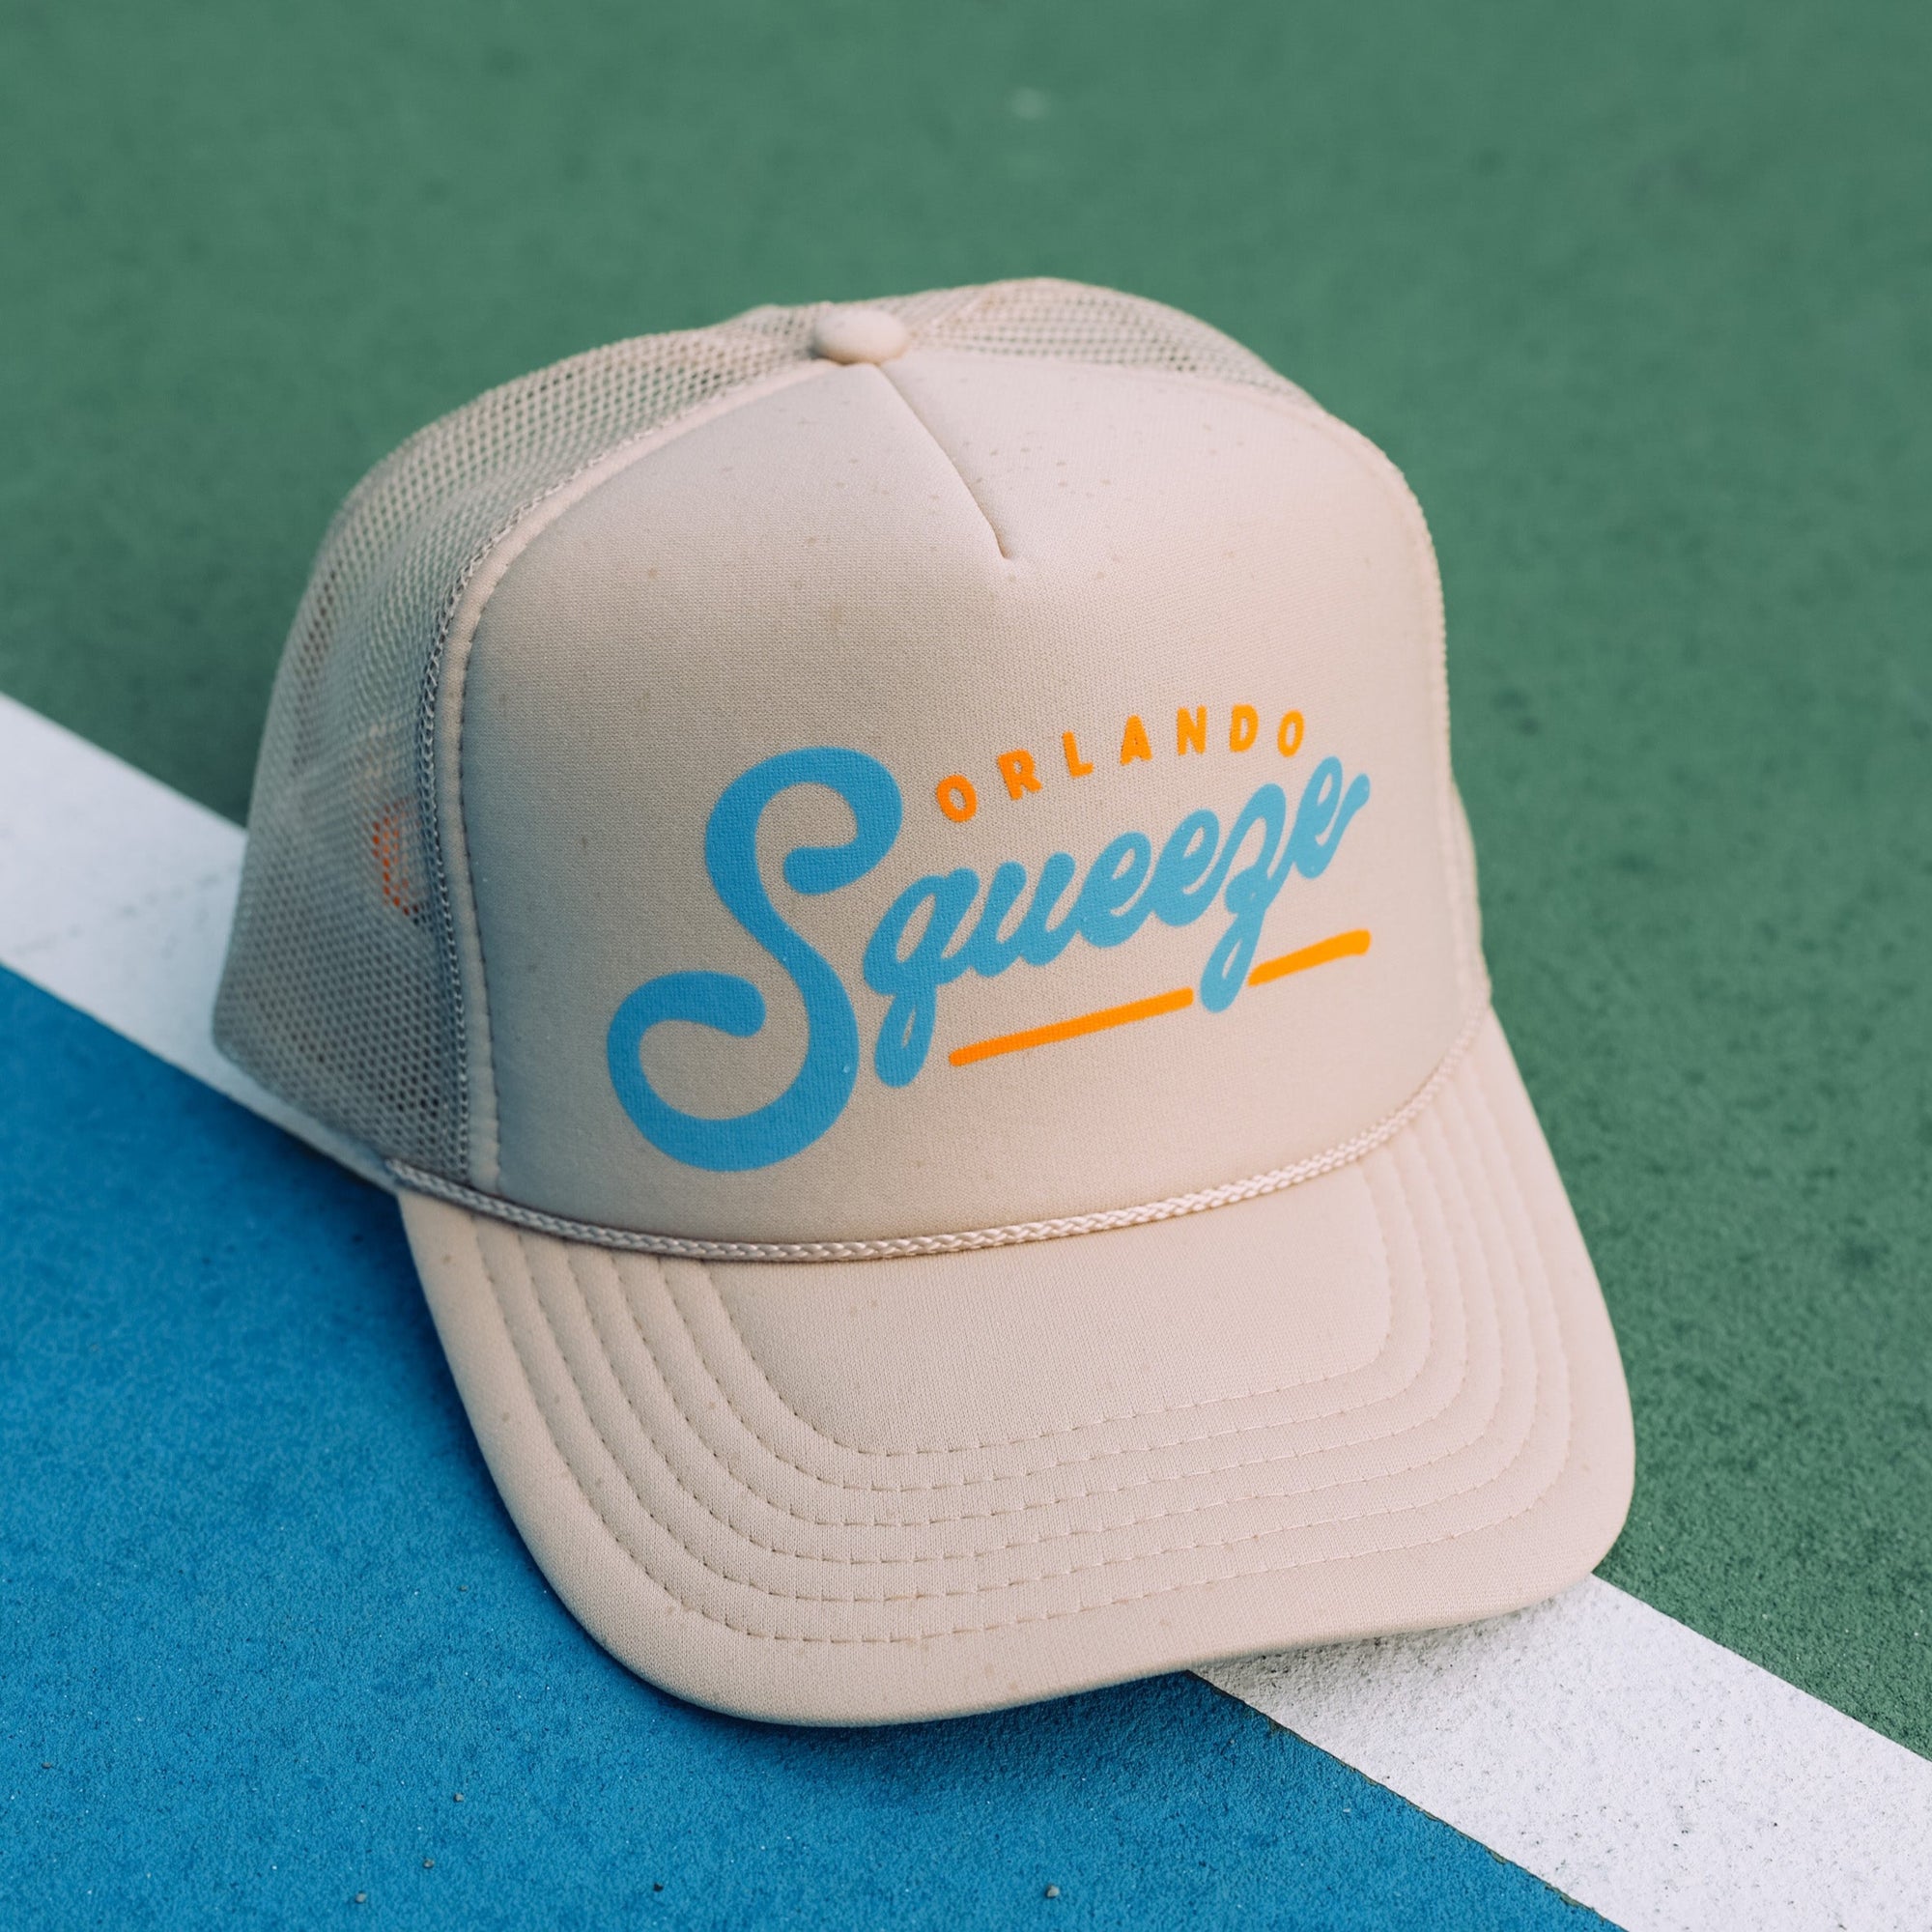 Orlando Squeeze Trucker Hat